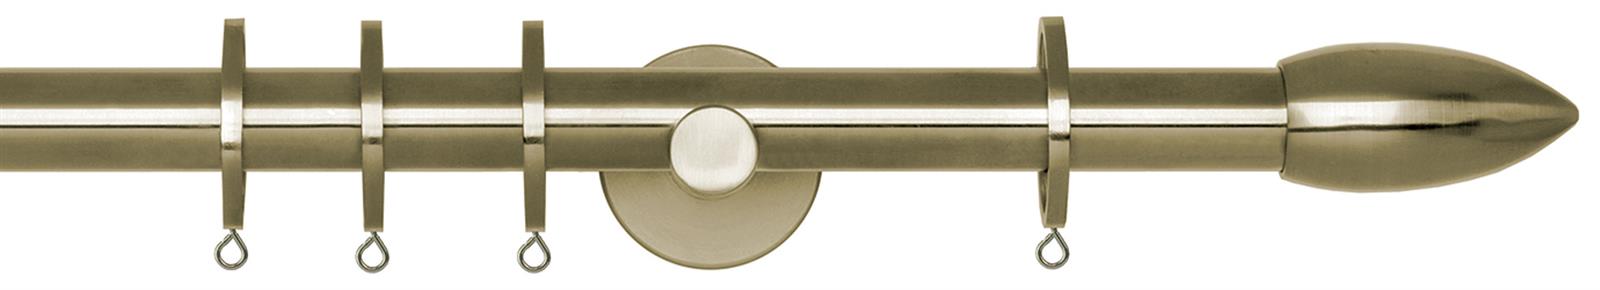 Neo 19mm Pole Spun Brass Bullet